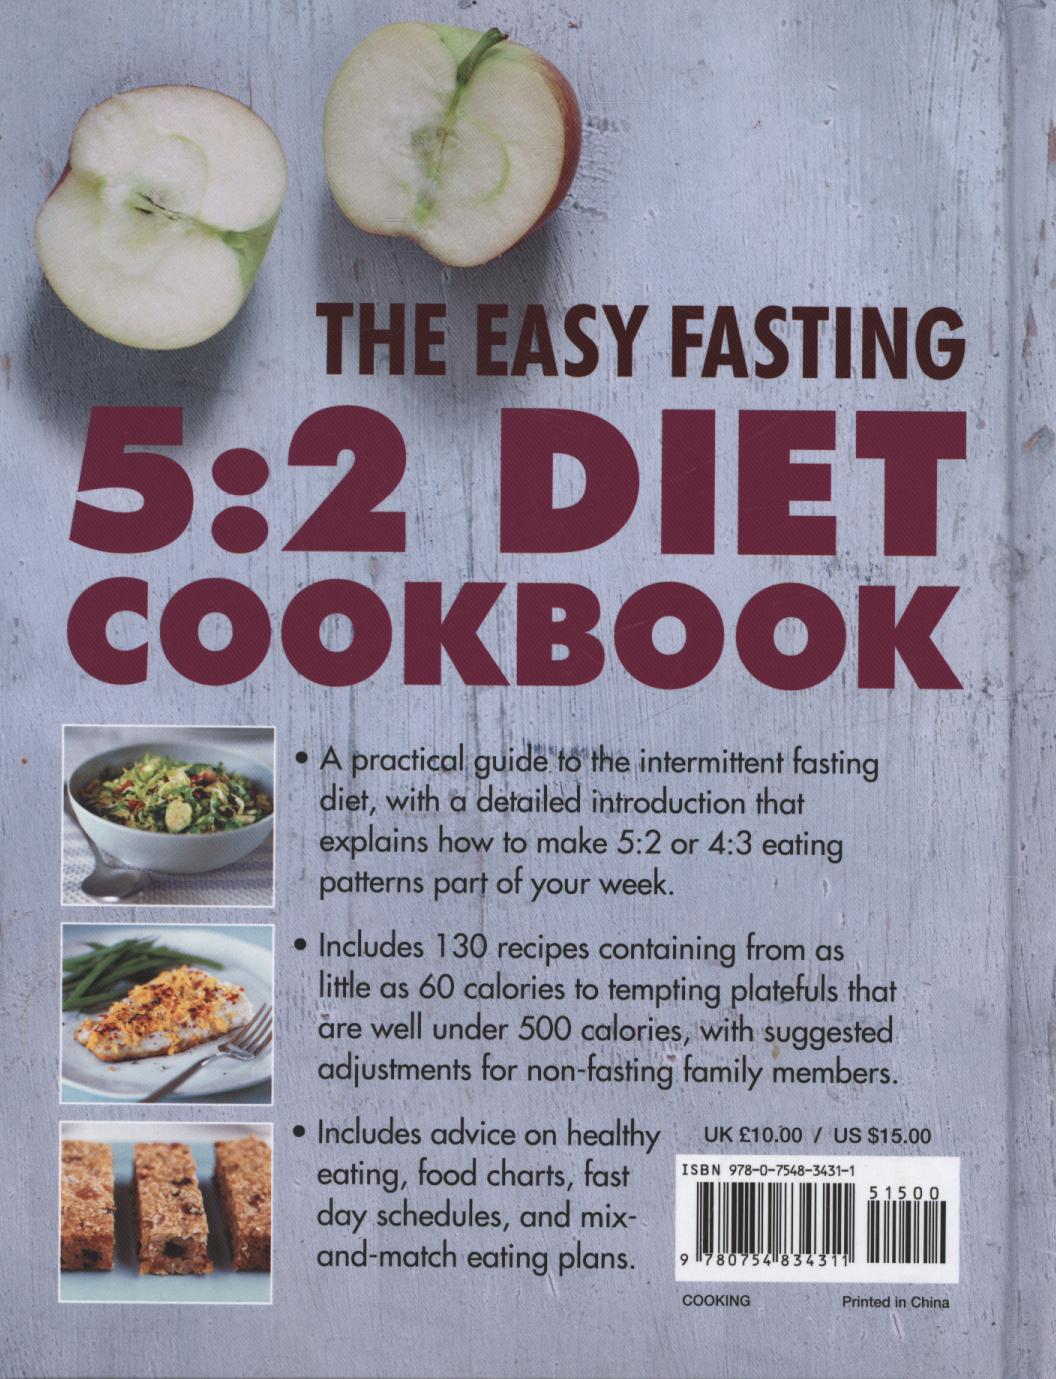 Easy Fasting 5:2 Diet Cookbook